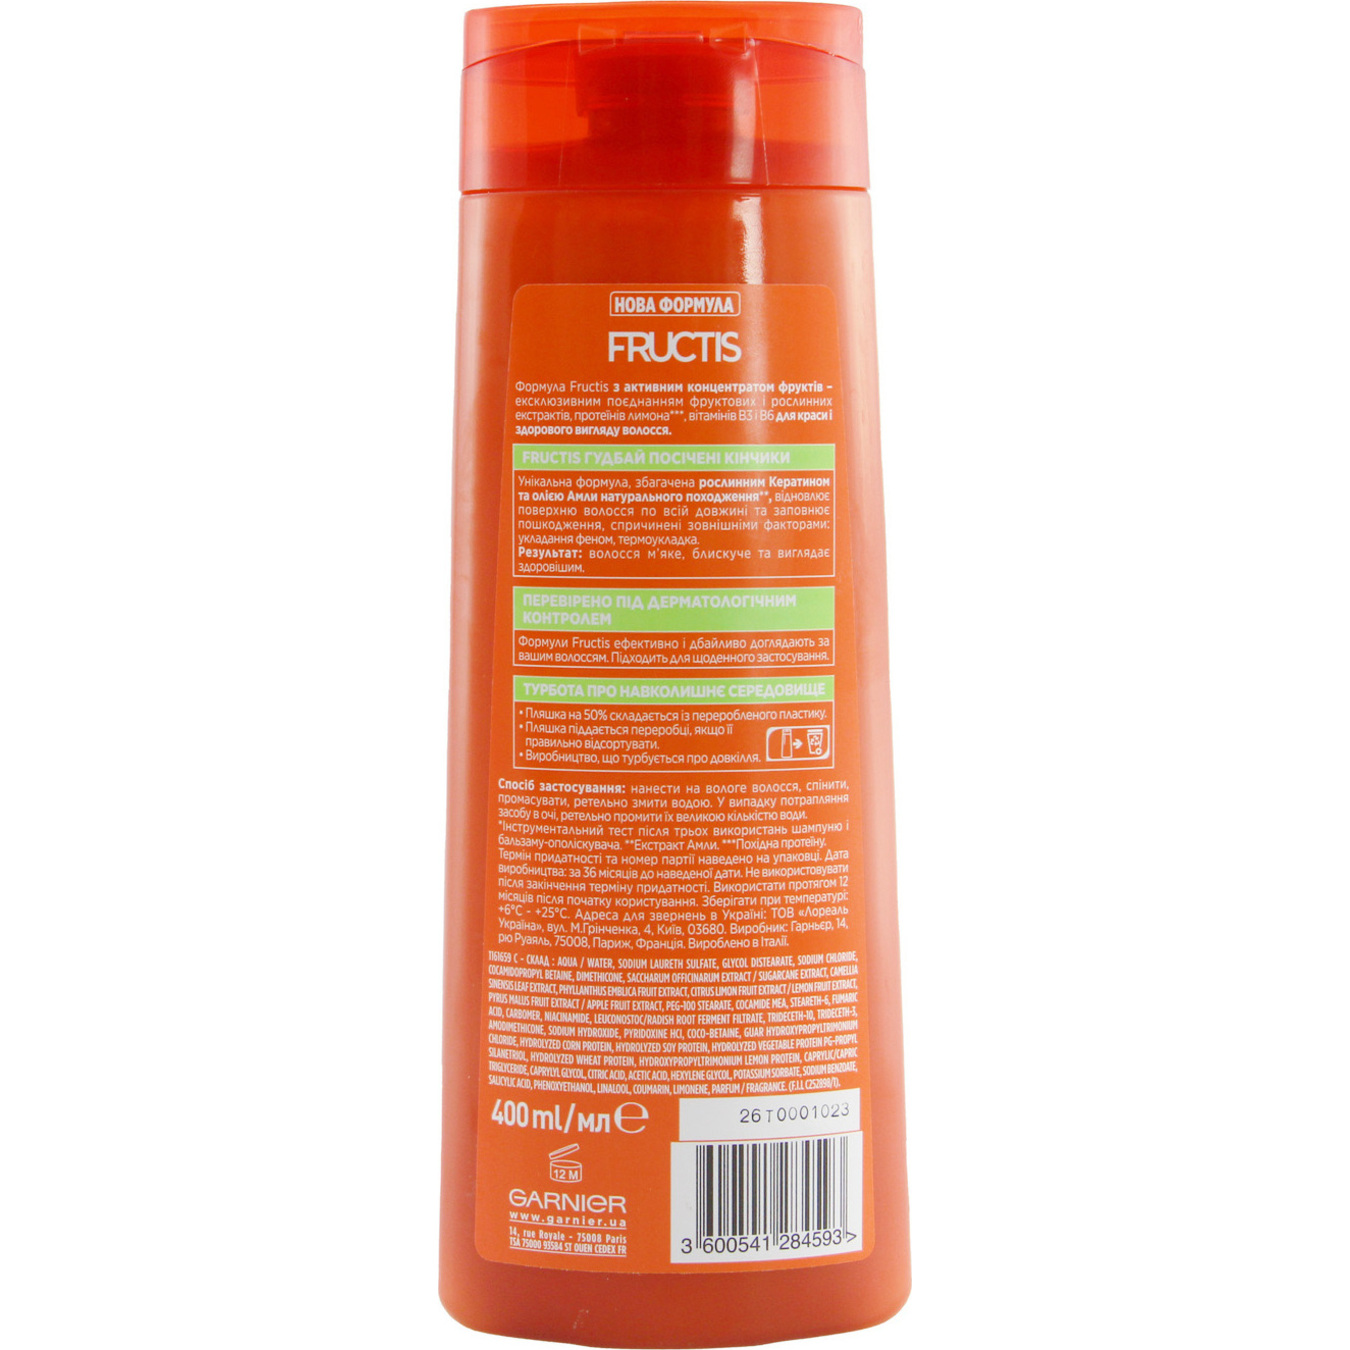 Garnier Fructis For Hair Shampoo 400ml 2